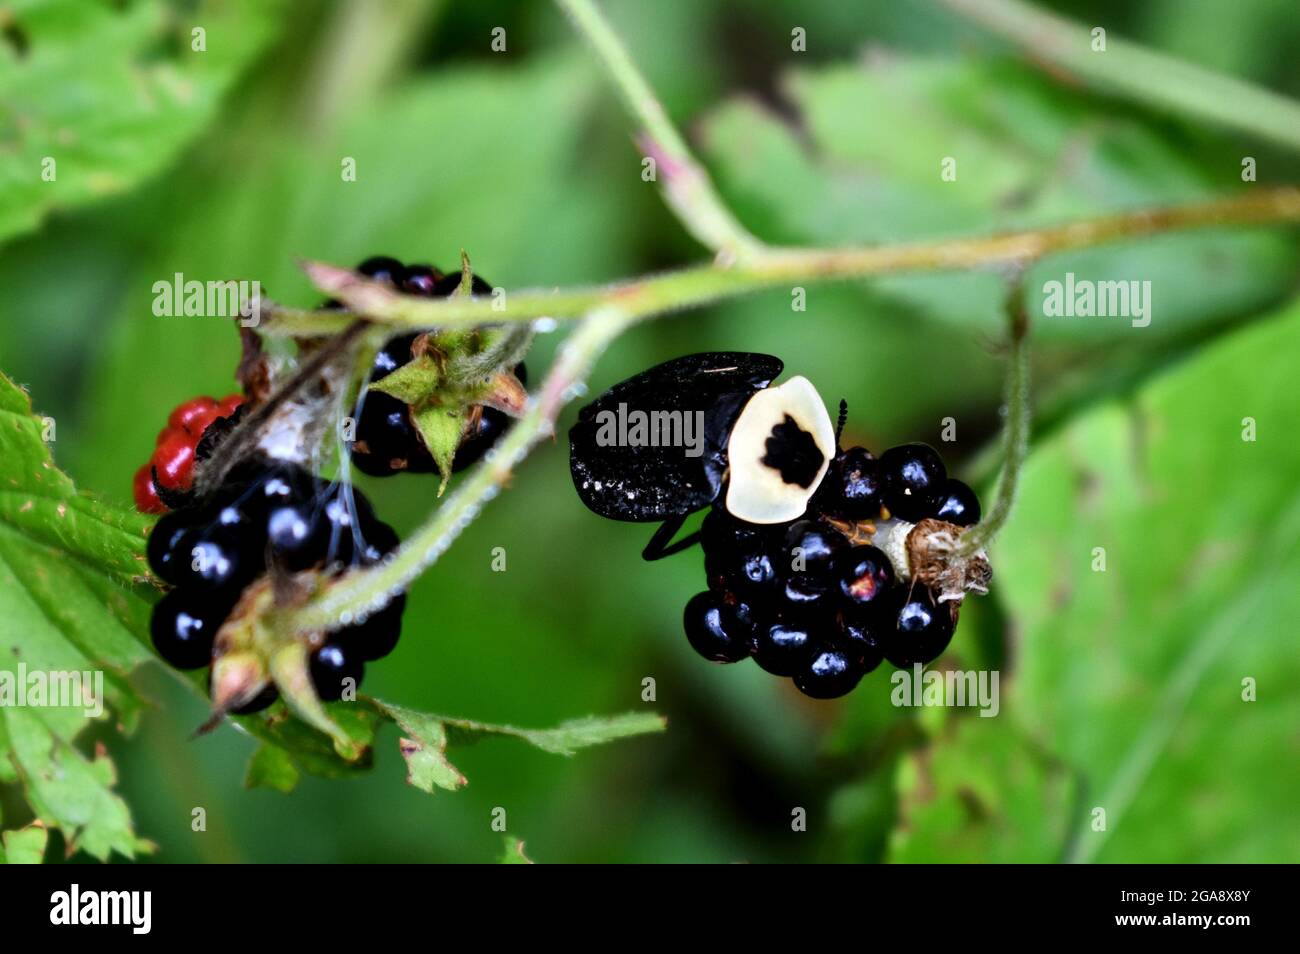 American Carrion Beetle (Necrophila americana) on wild blackberries Stock Photo